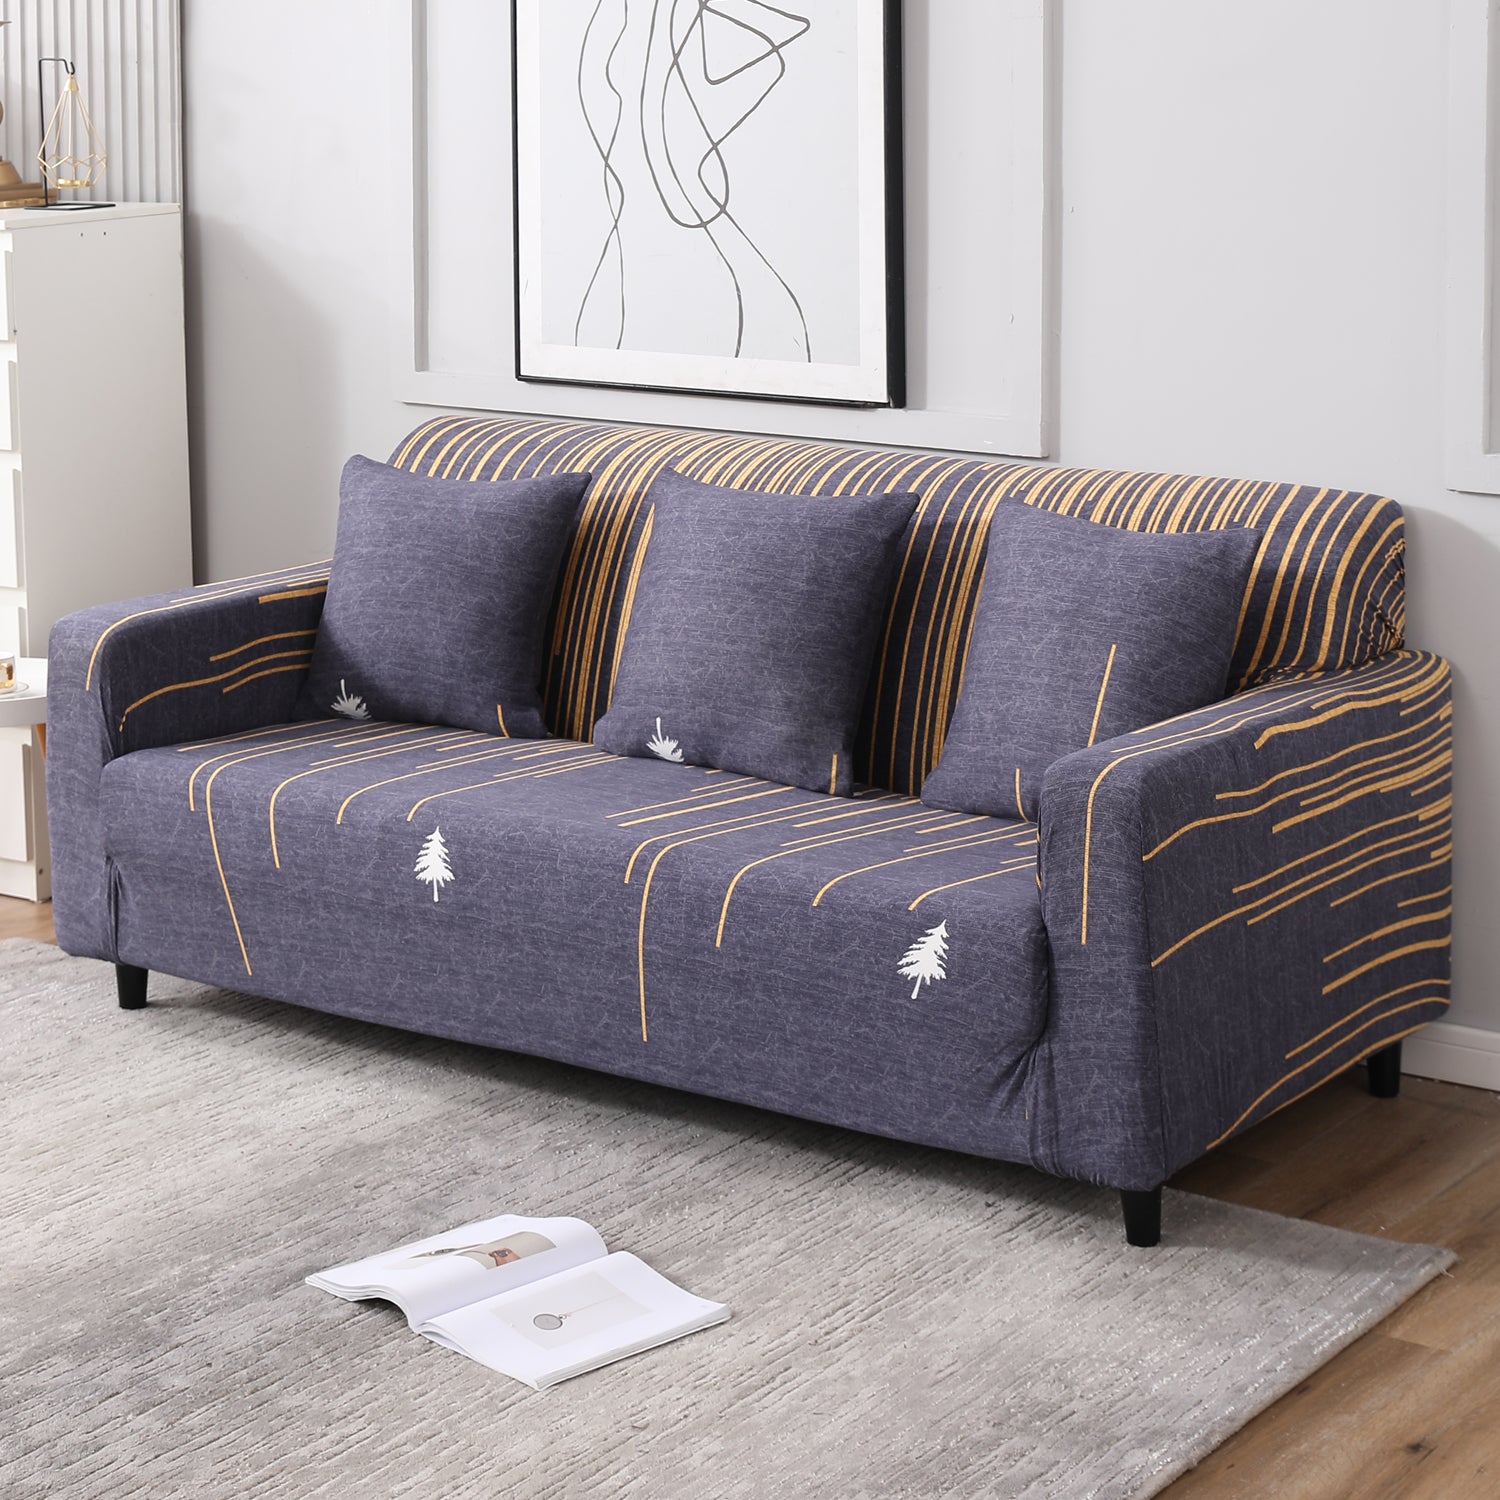 Elastic Stretchable Printed Sofa Cover, Striped Print